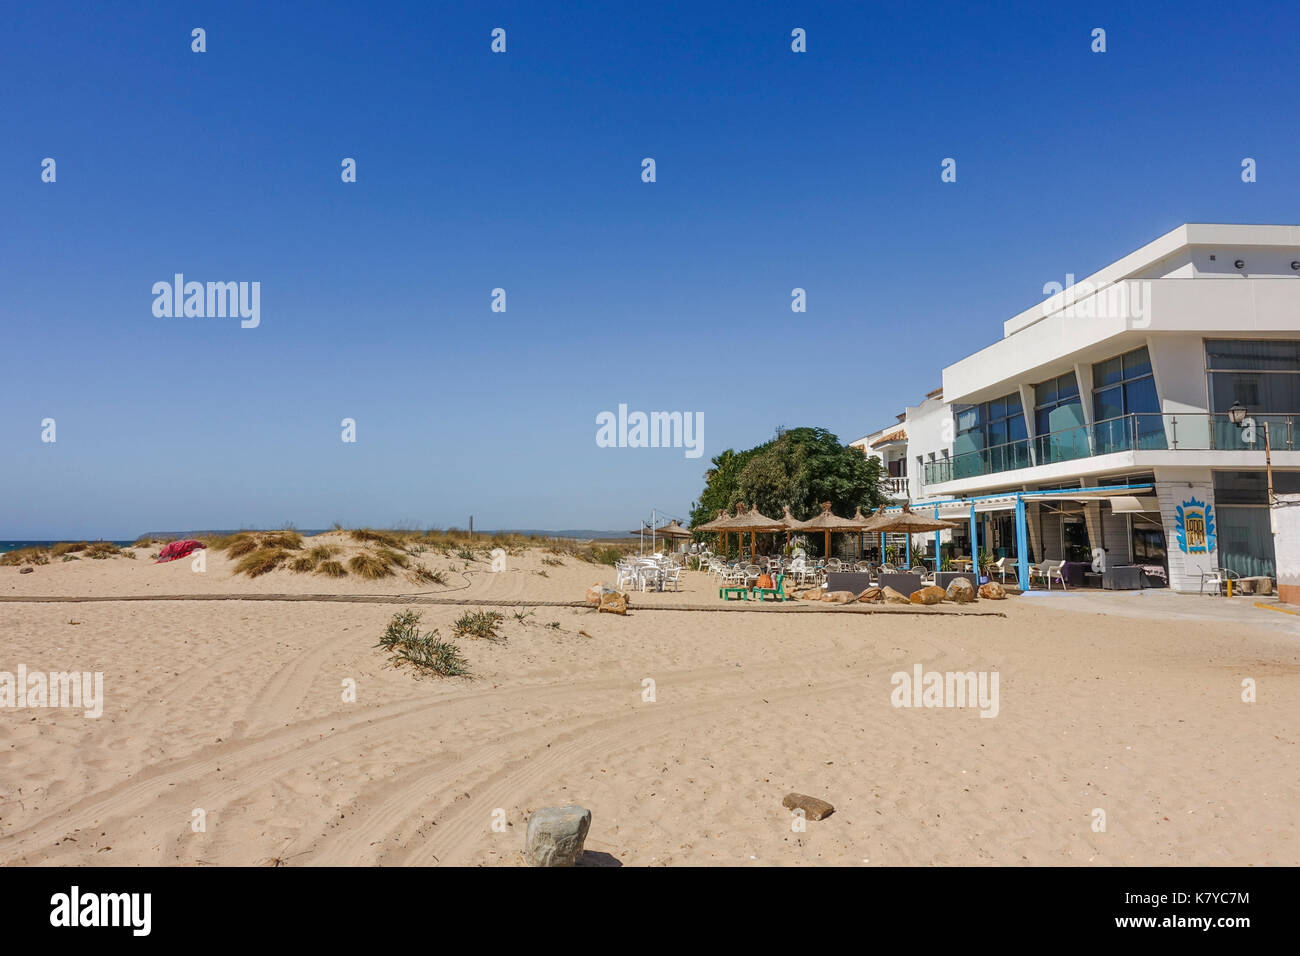 Zahara de los atunes, Beach hotel with terraces, Cadiz, Andalusia, Spain Stock Photo